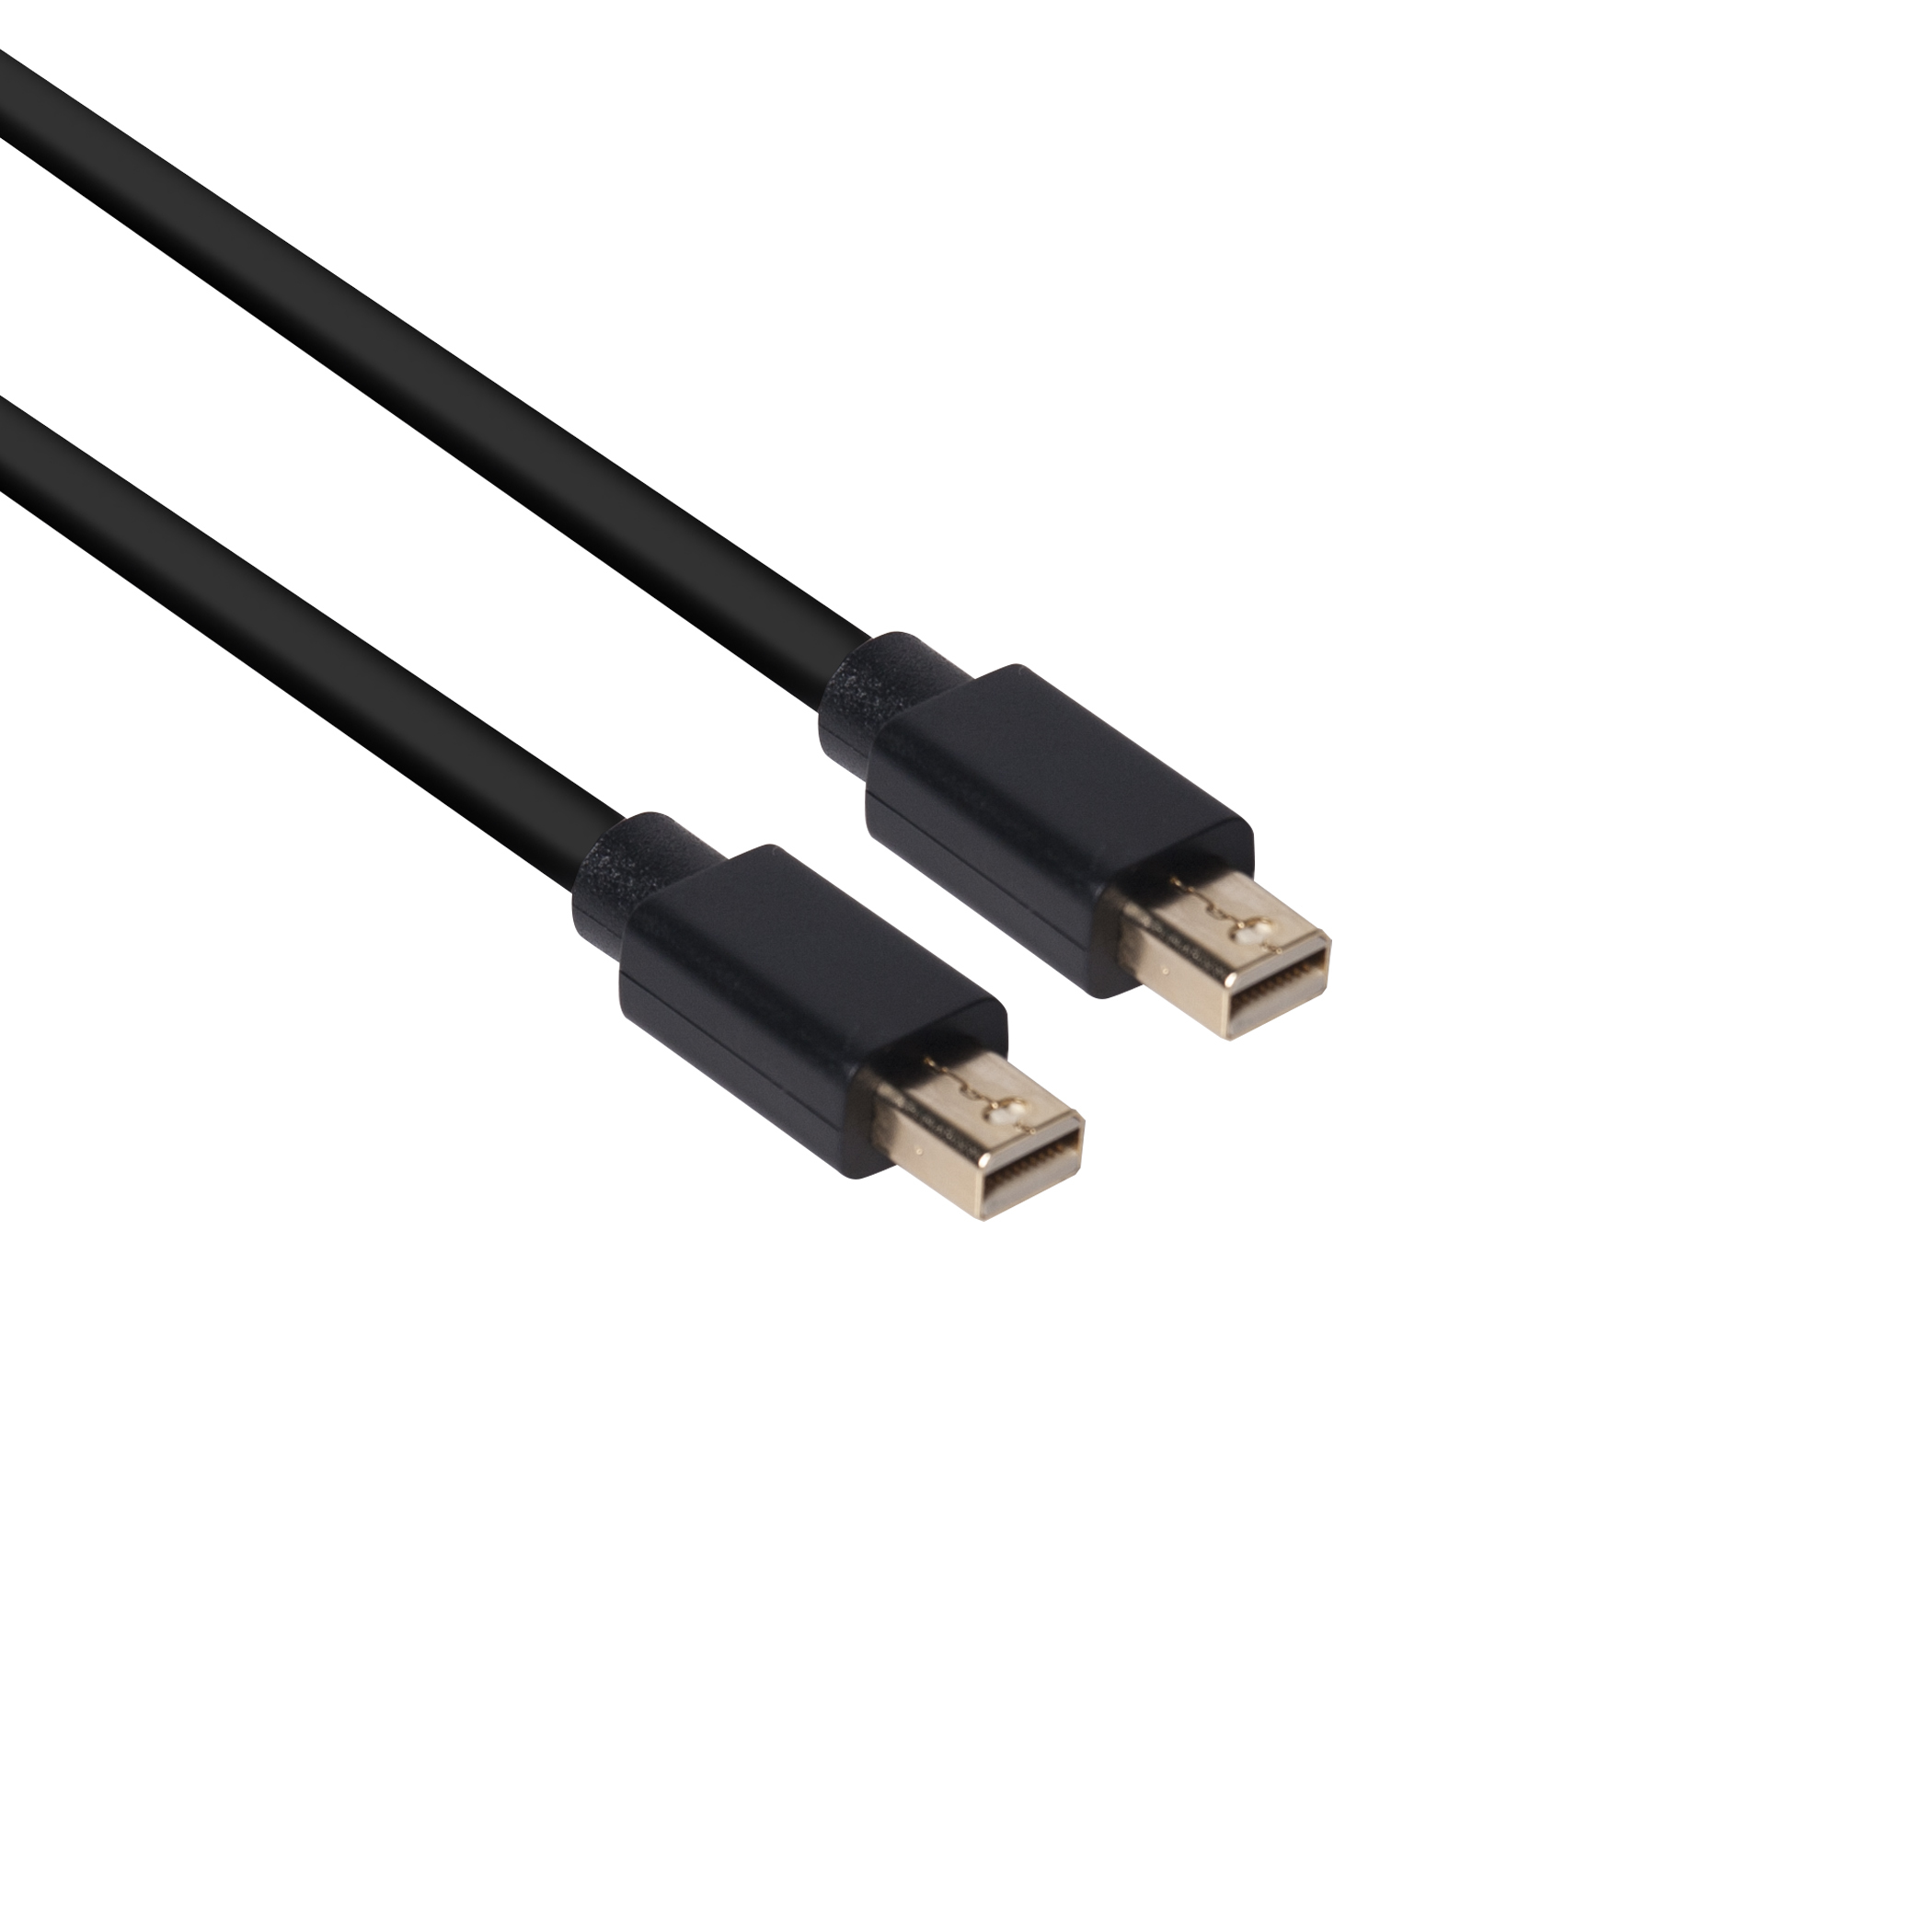 2 Meter (6.56 FT) DisplayPort Cable